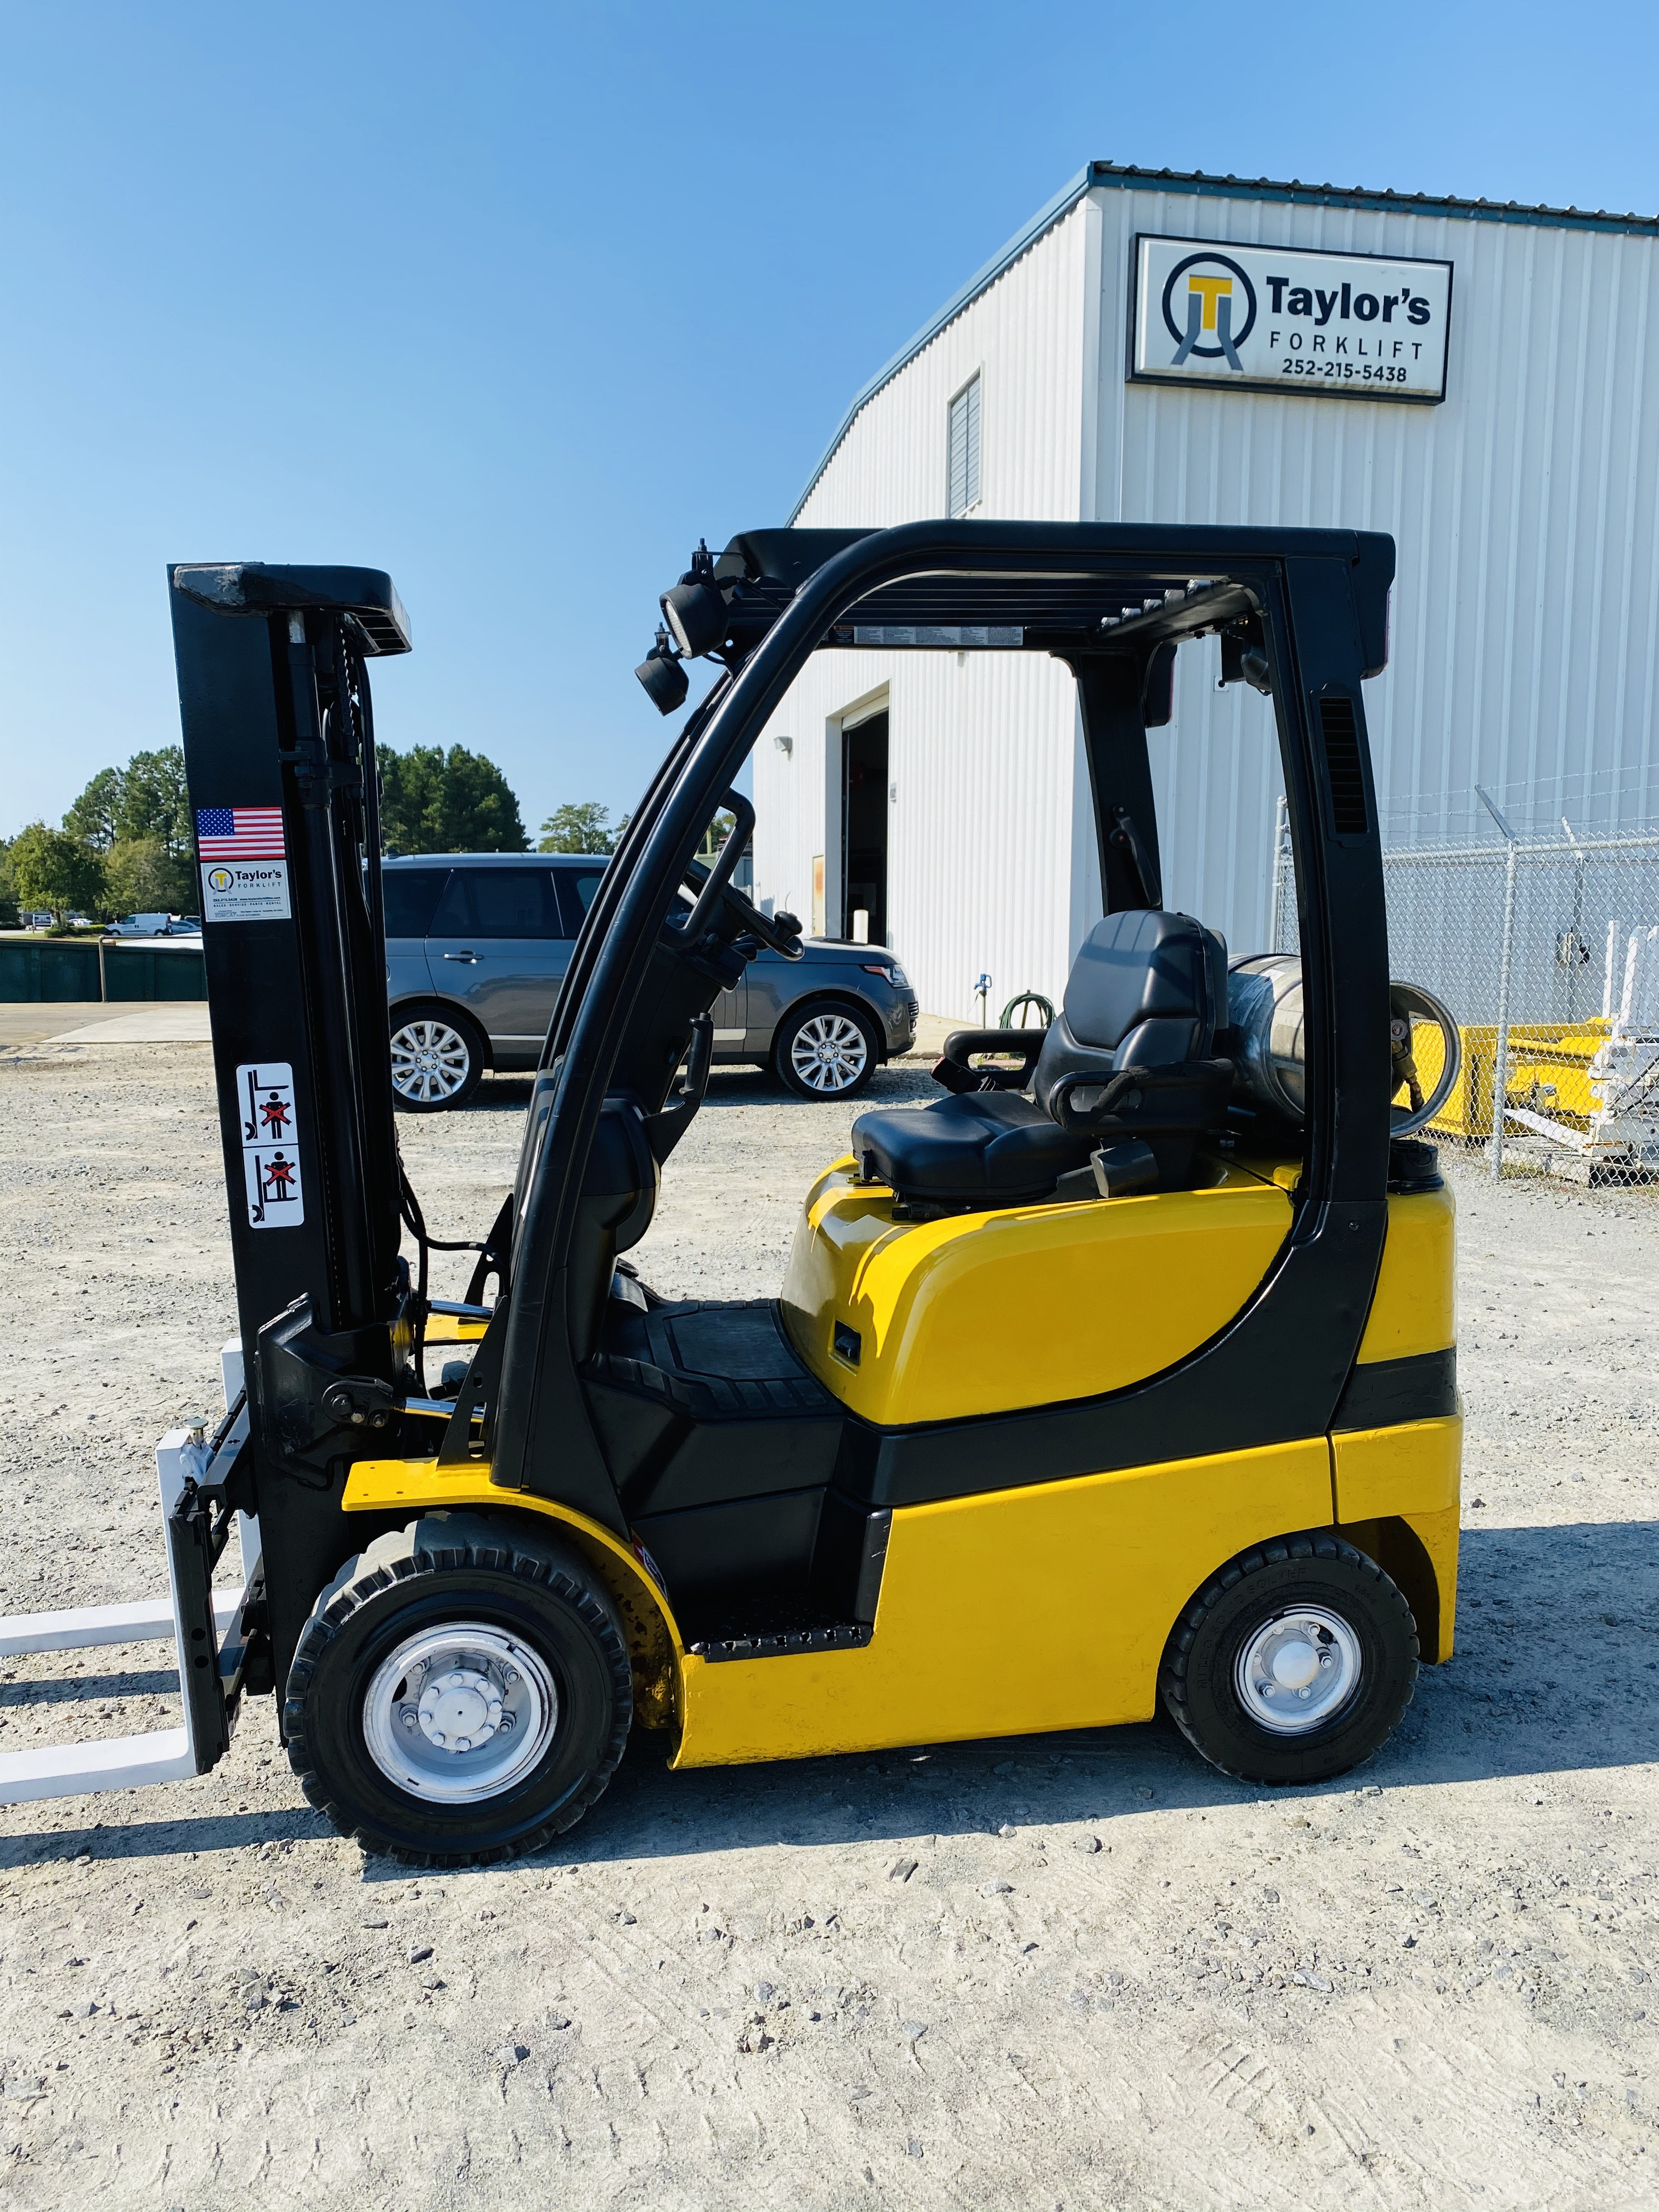 New Used Forklifts For Sale Taylor S Forklift